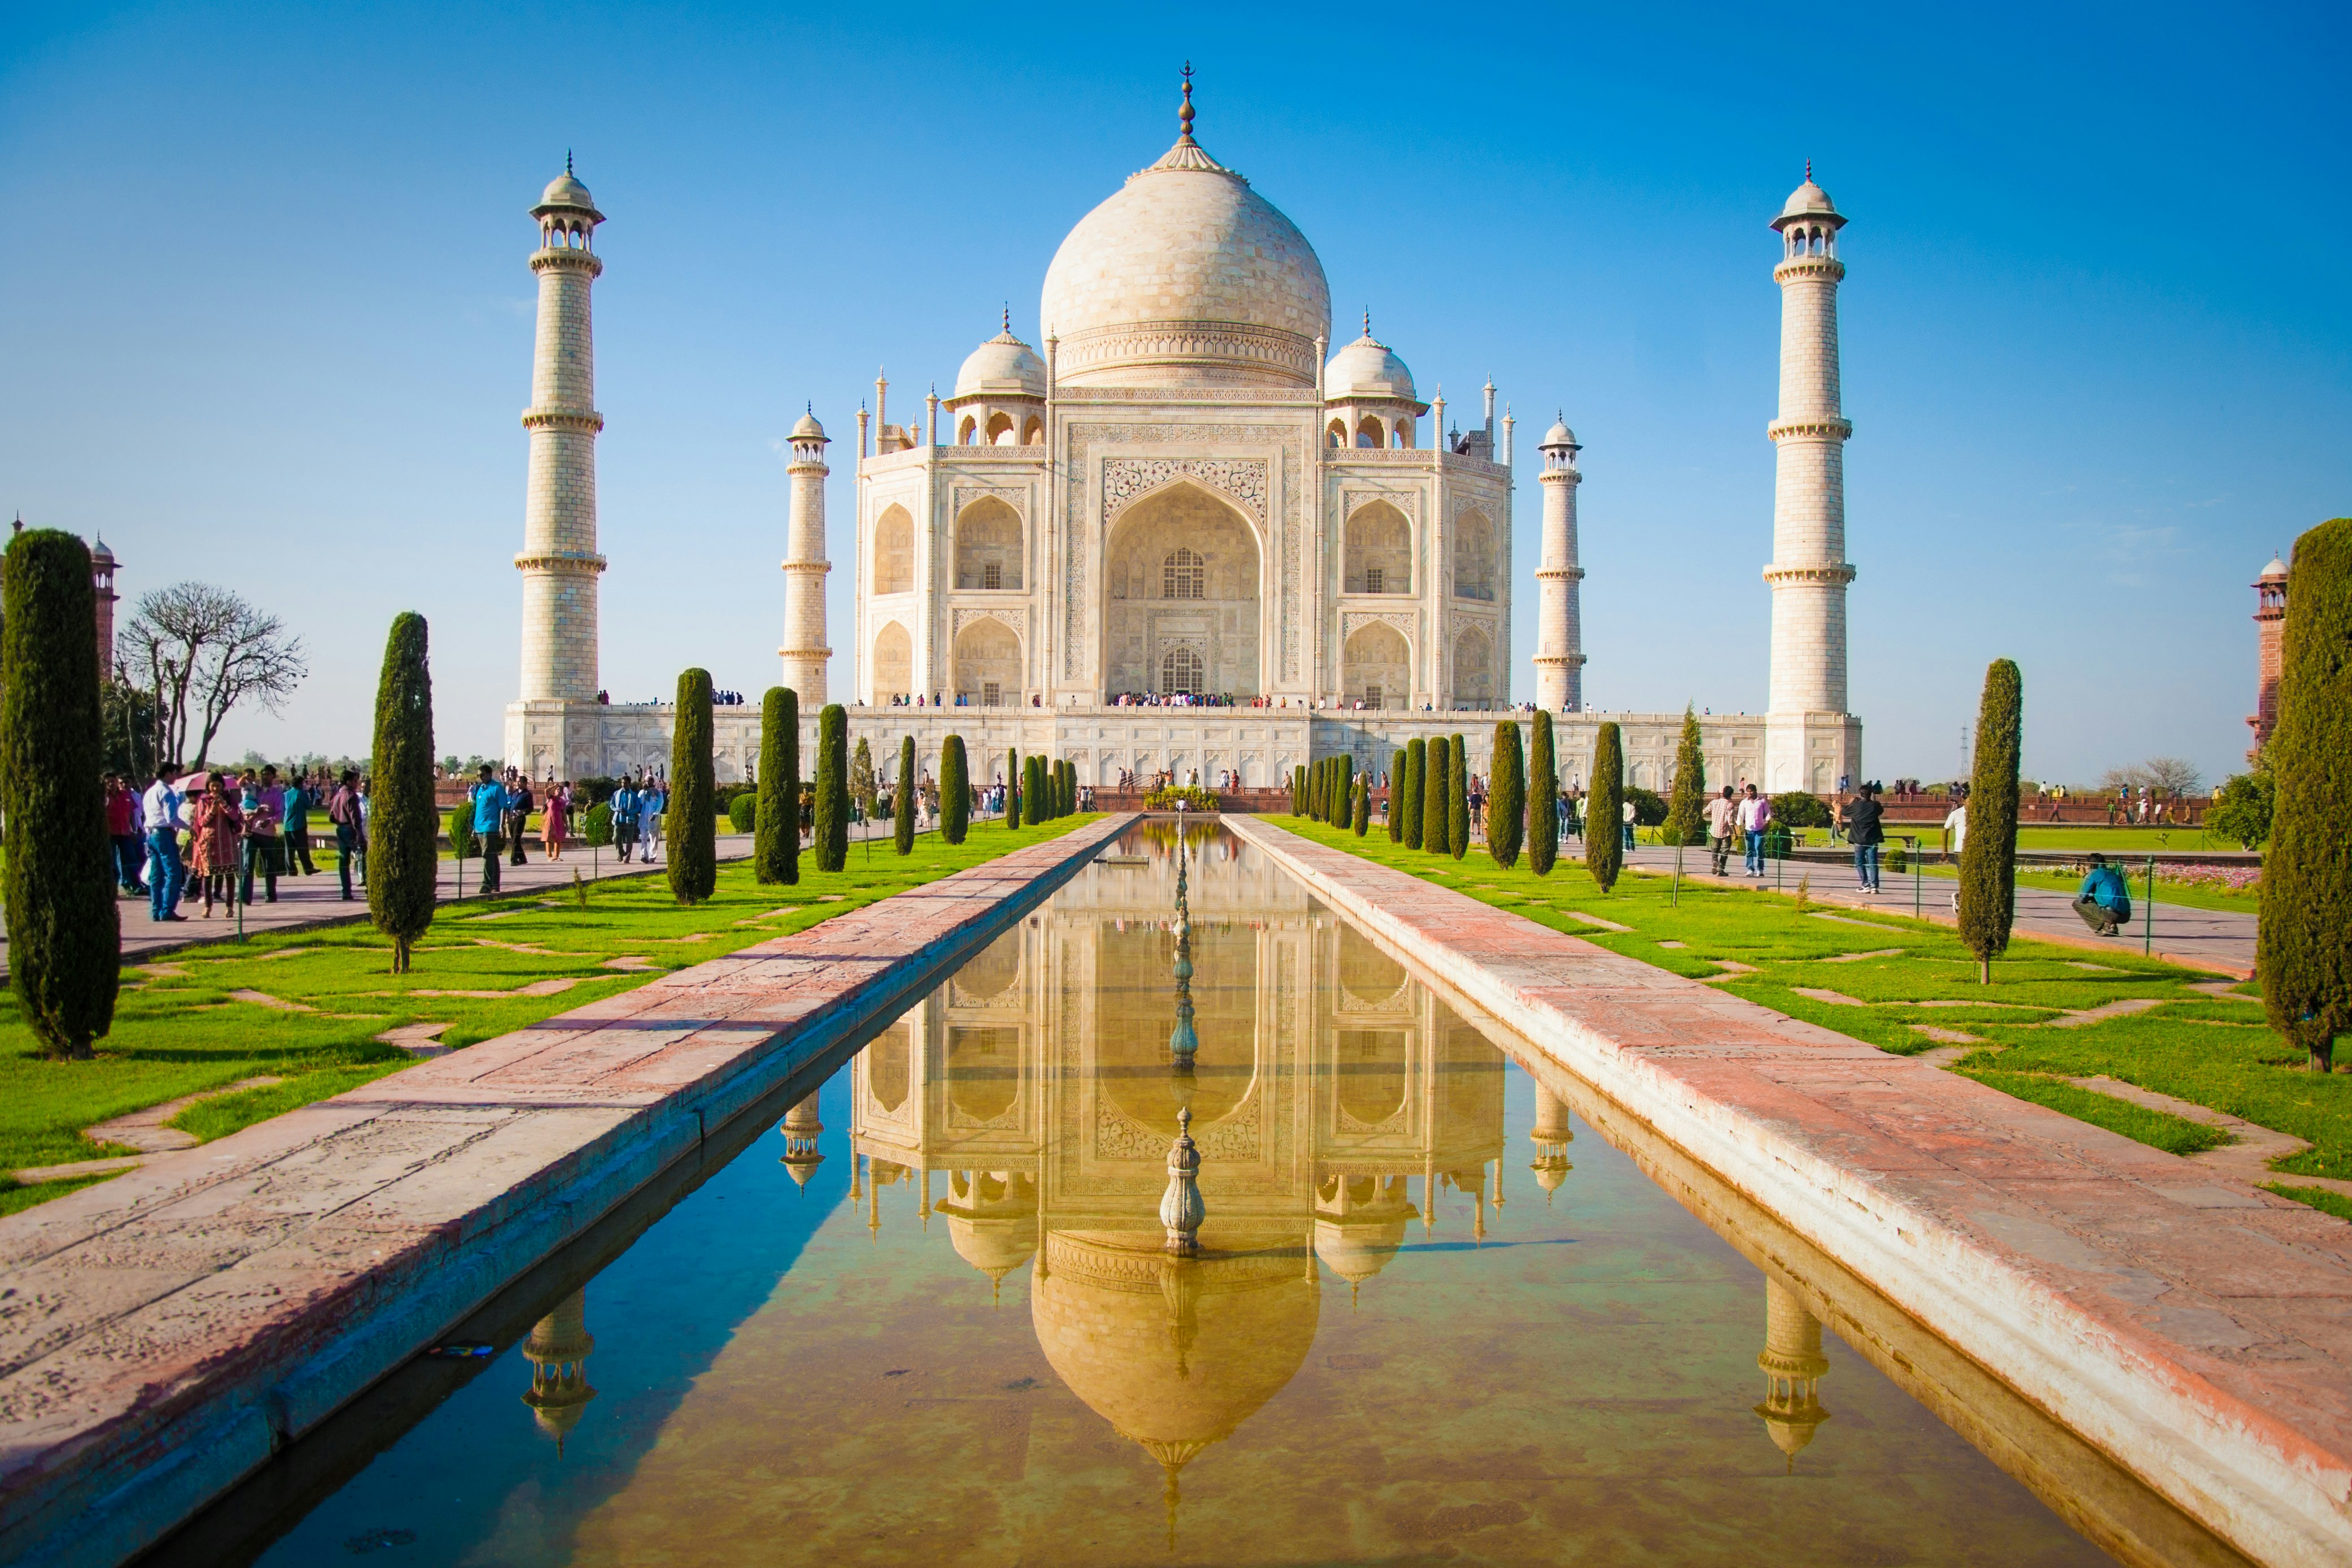 The exterior of the Taj Mahal in India